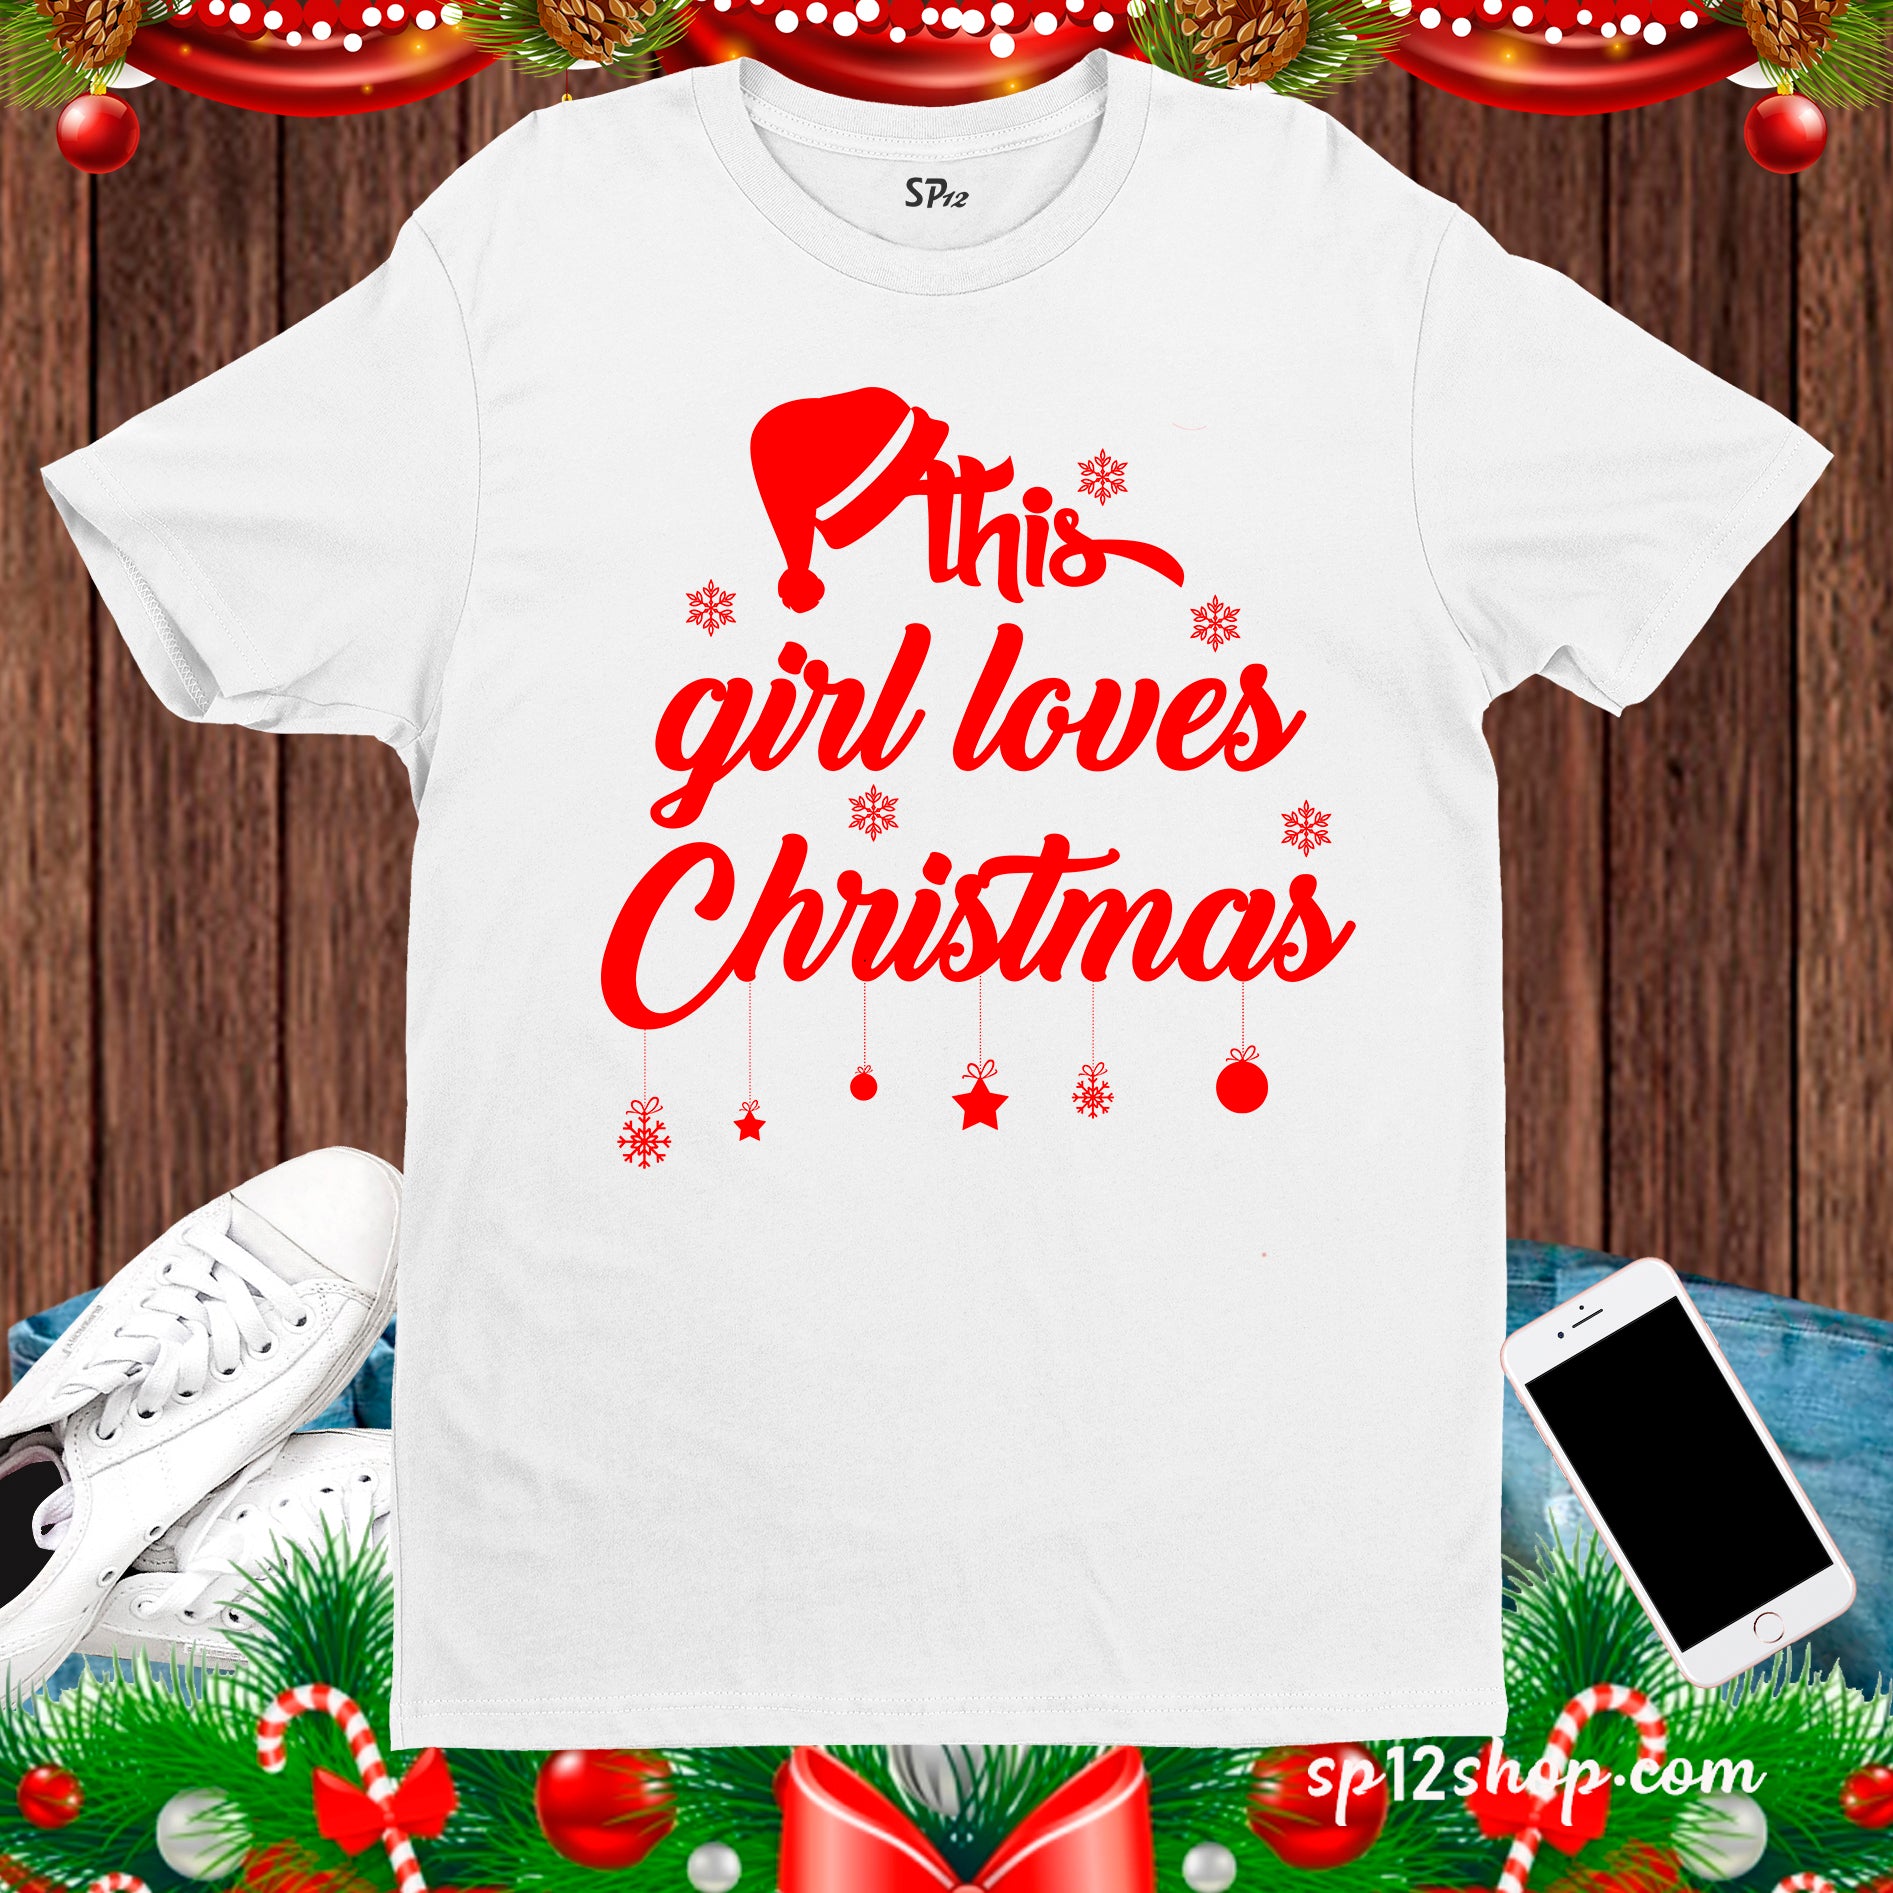 This Girl Loves Christmas T Shirt